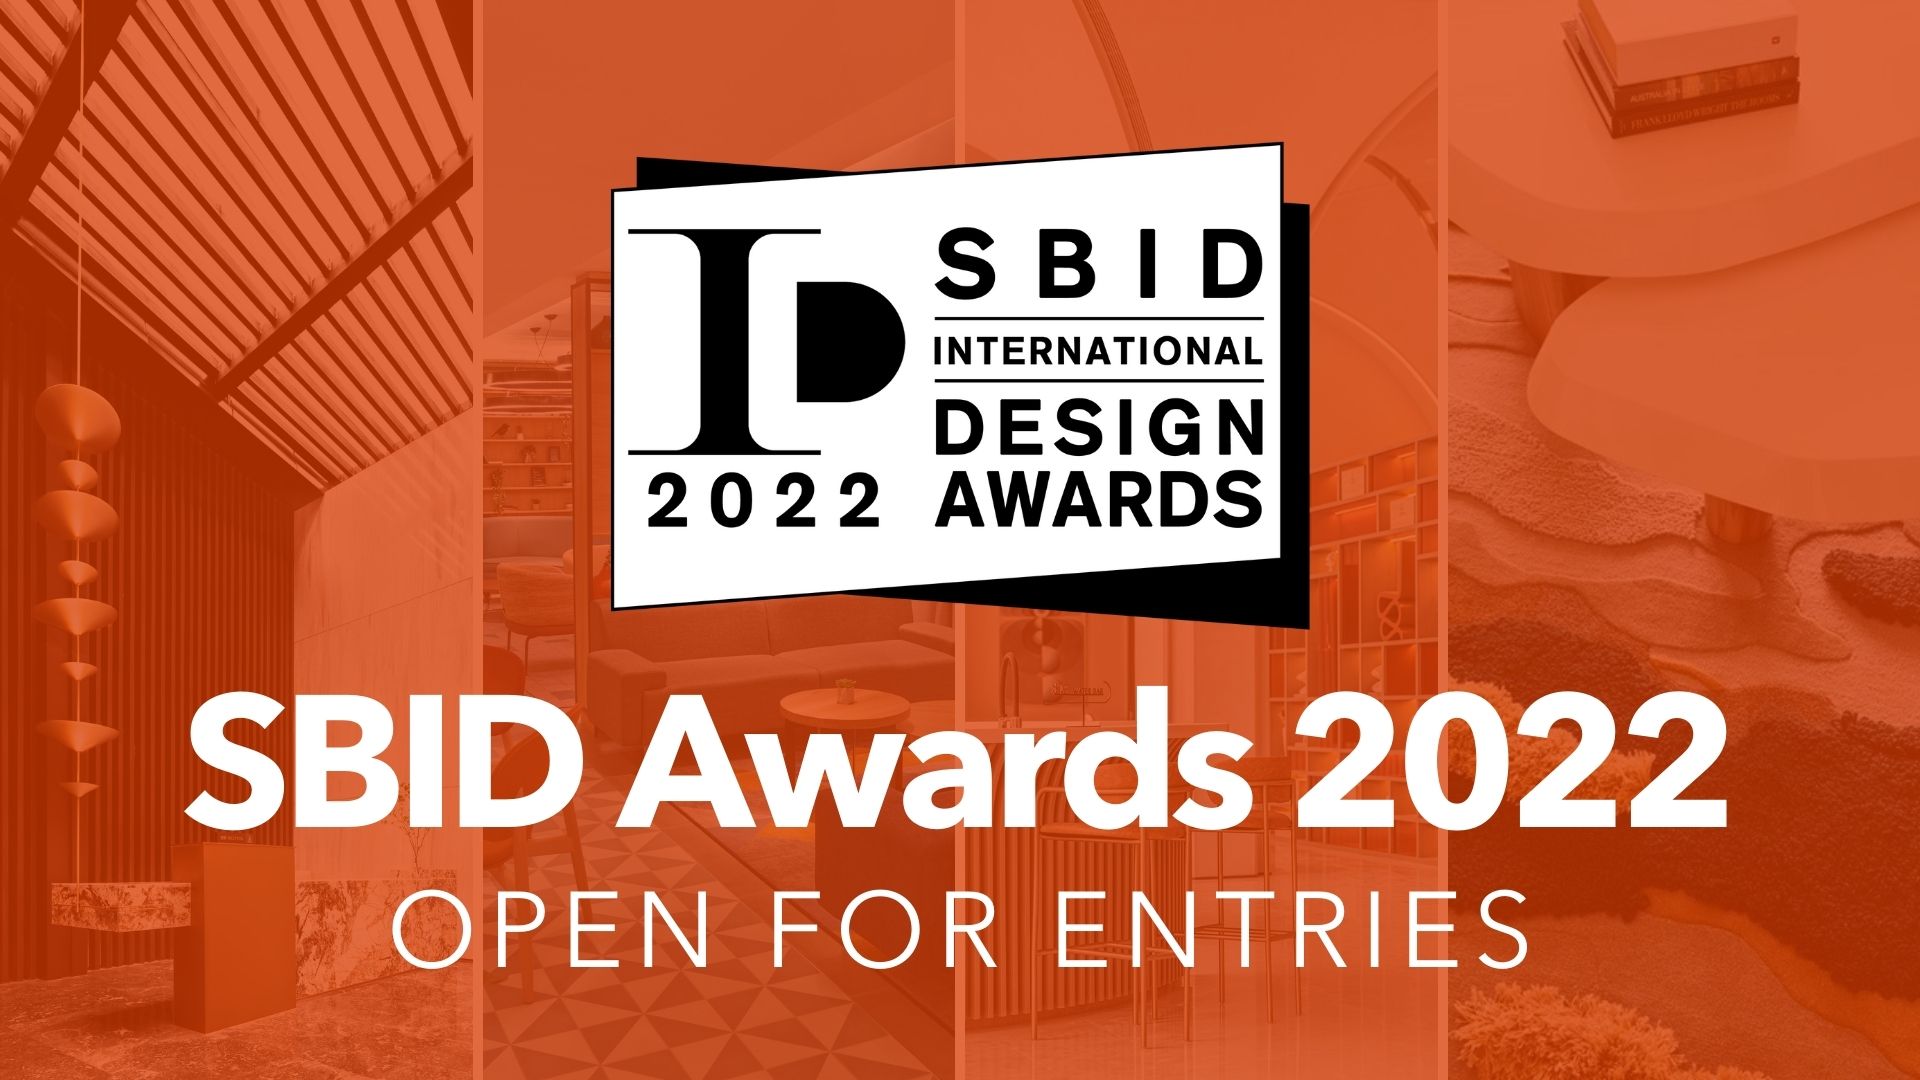 sbid design awards 2022, The SBID International Design Awards launches for 2022